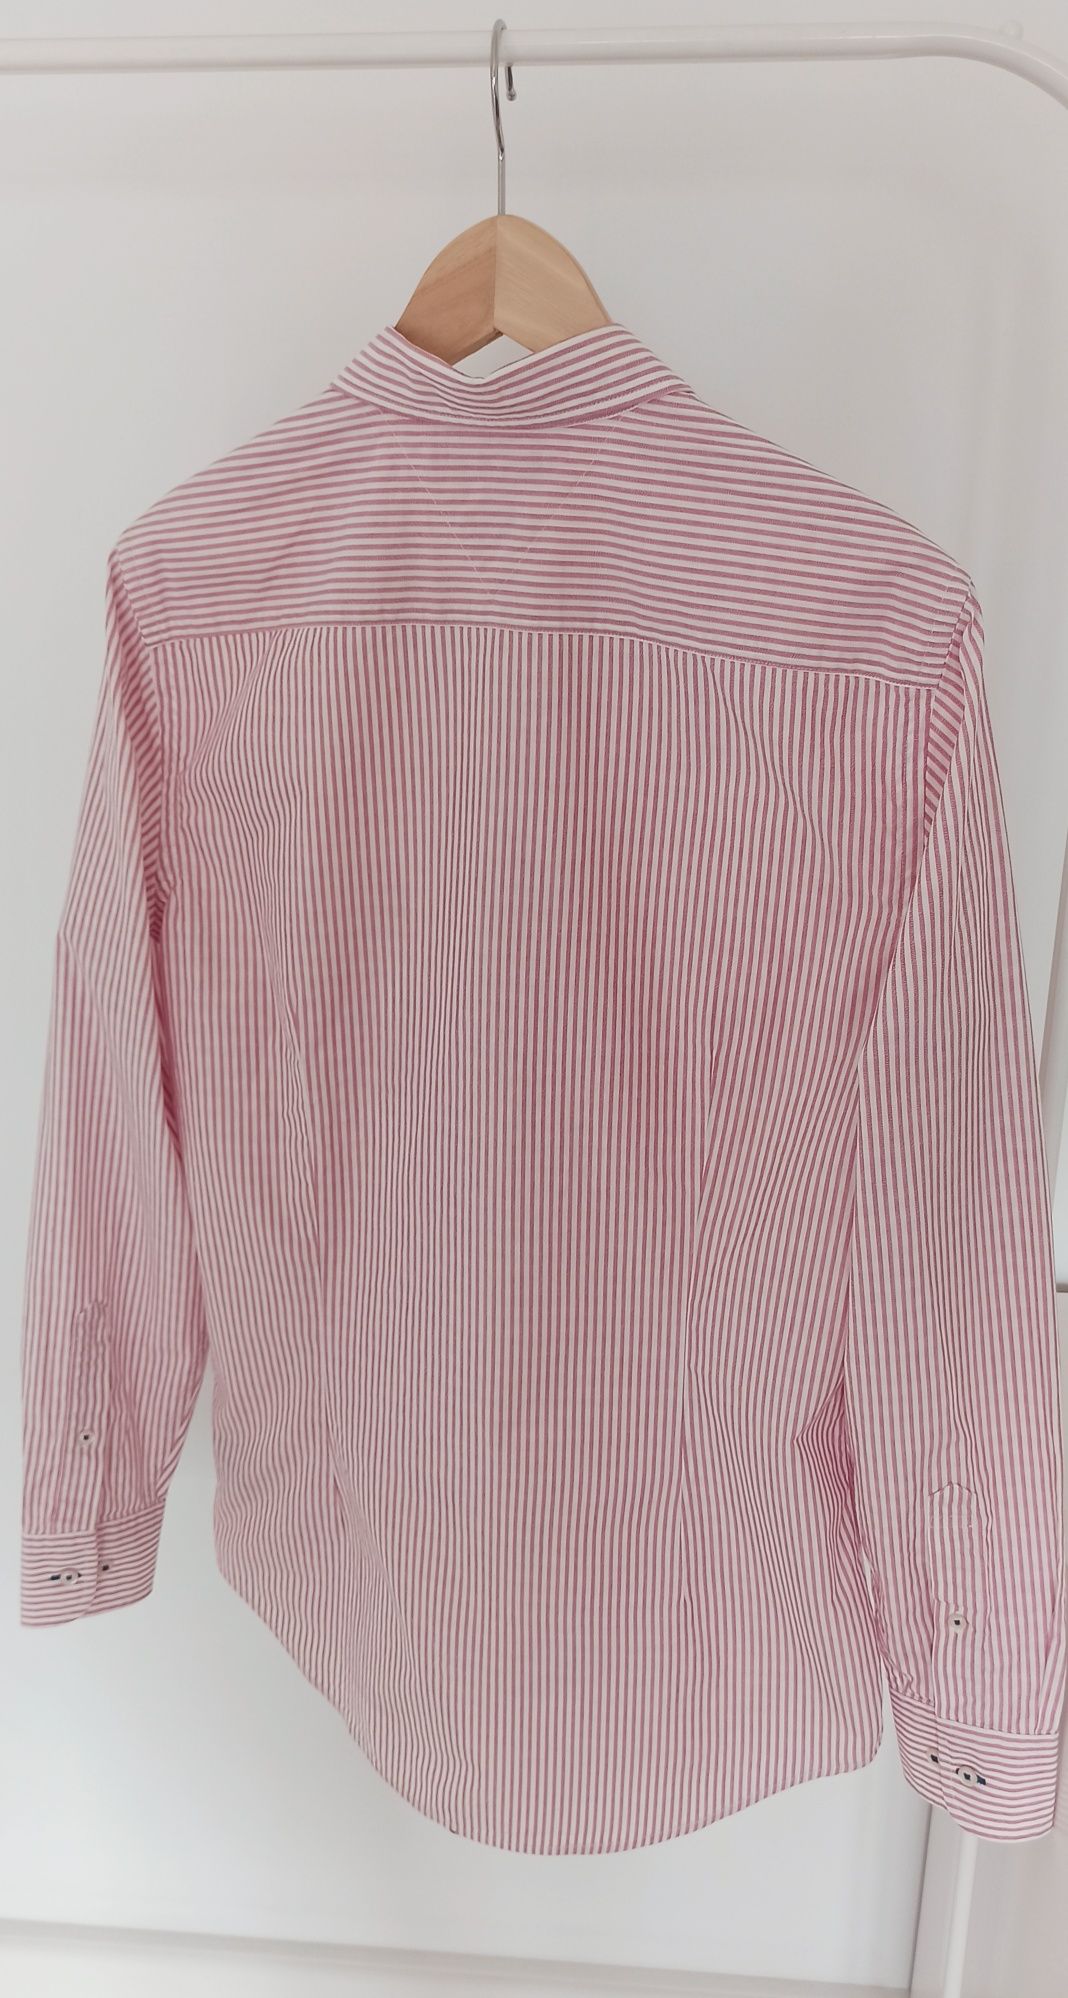 Męska koszula Tommy Hilfiger slim fit różowa w paski